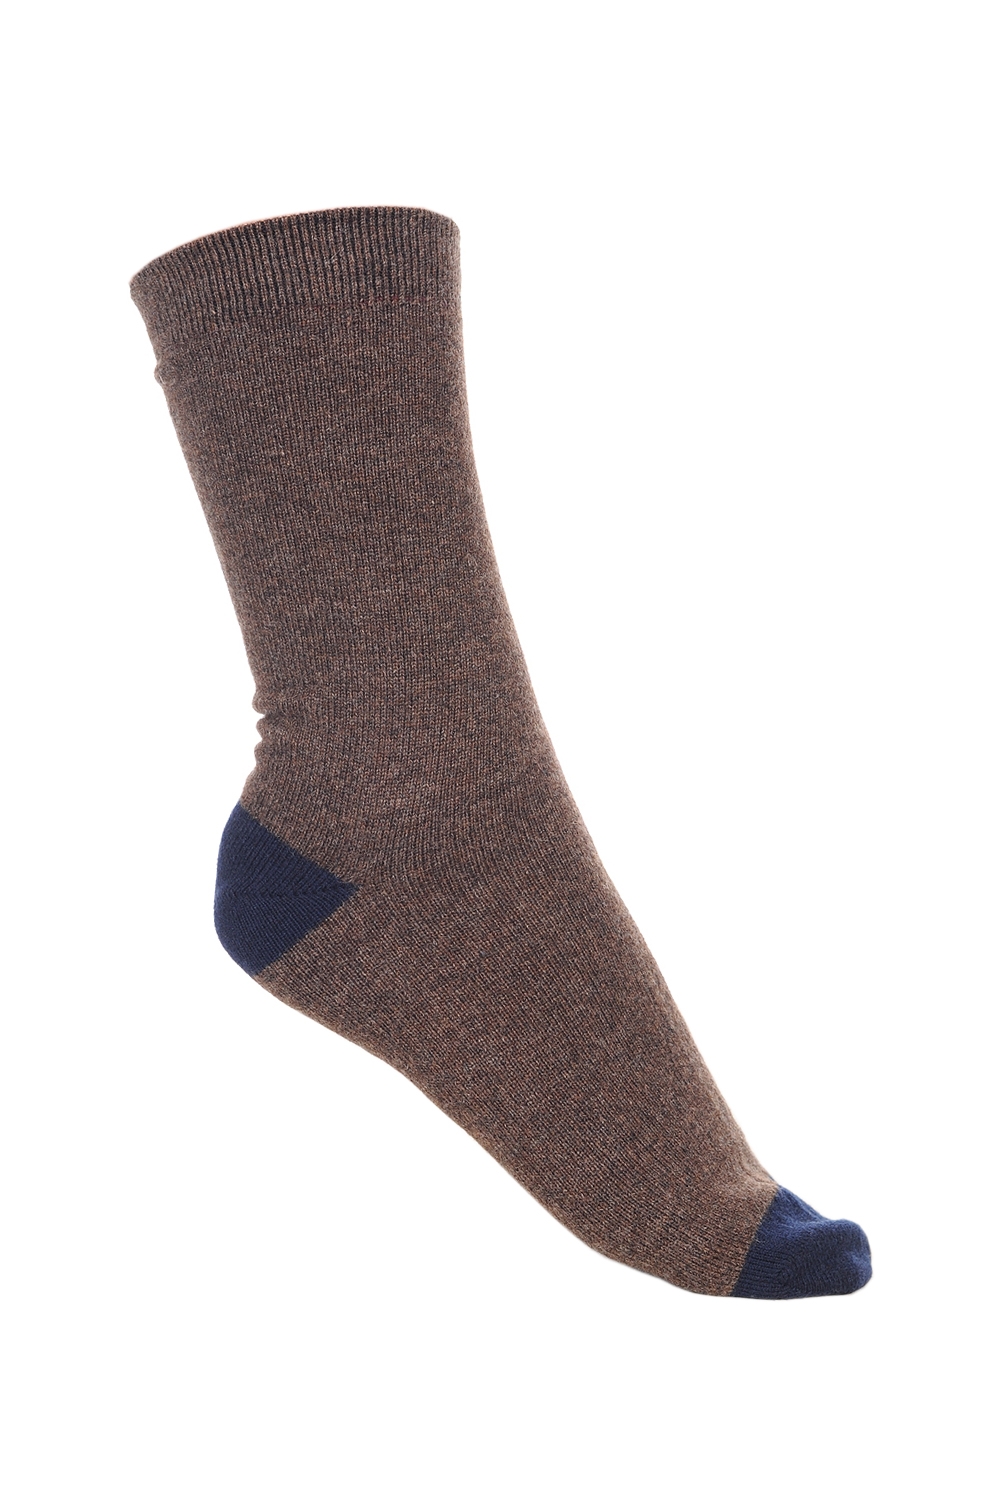 Cashmere & Elastane accessories socks frontibus marron chine dress blue 9 11